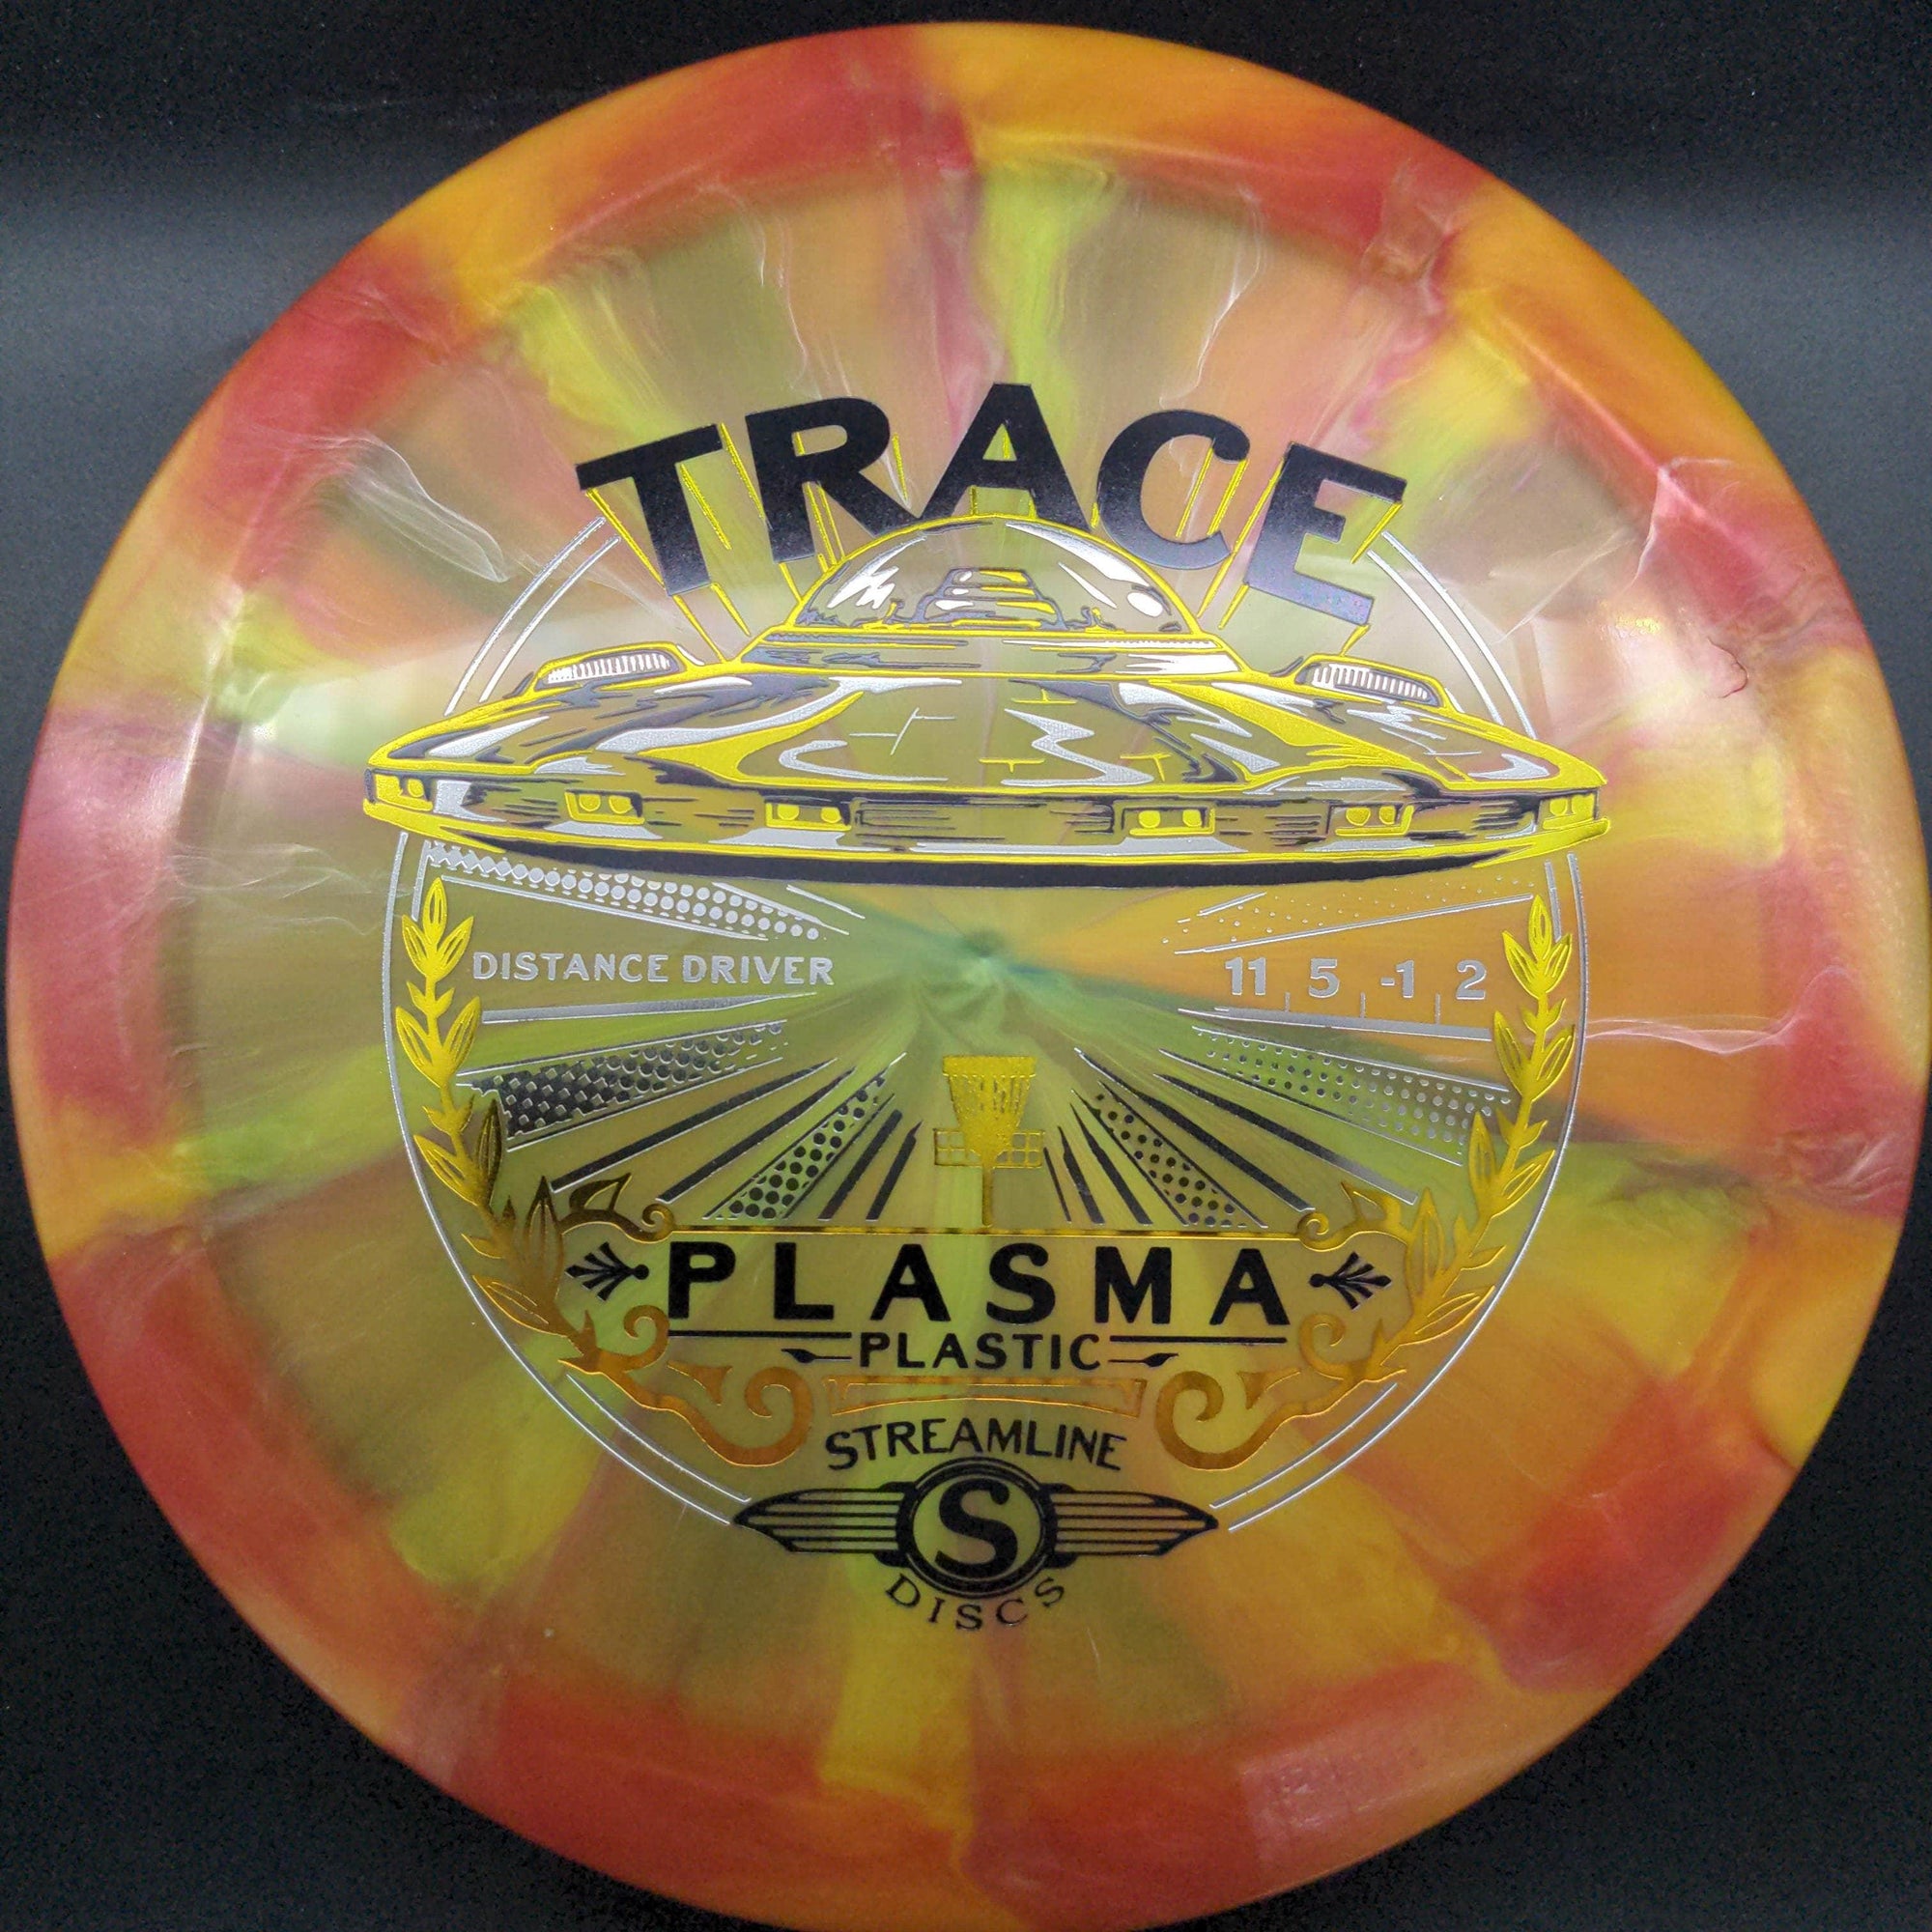 Streamline Distance Driver Red/Orange 174g Trace, Plasma